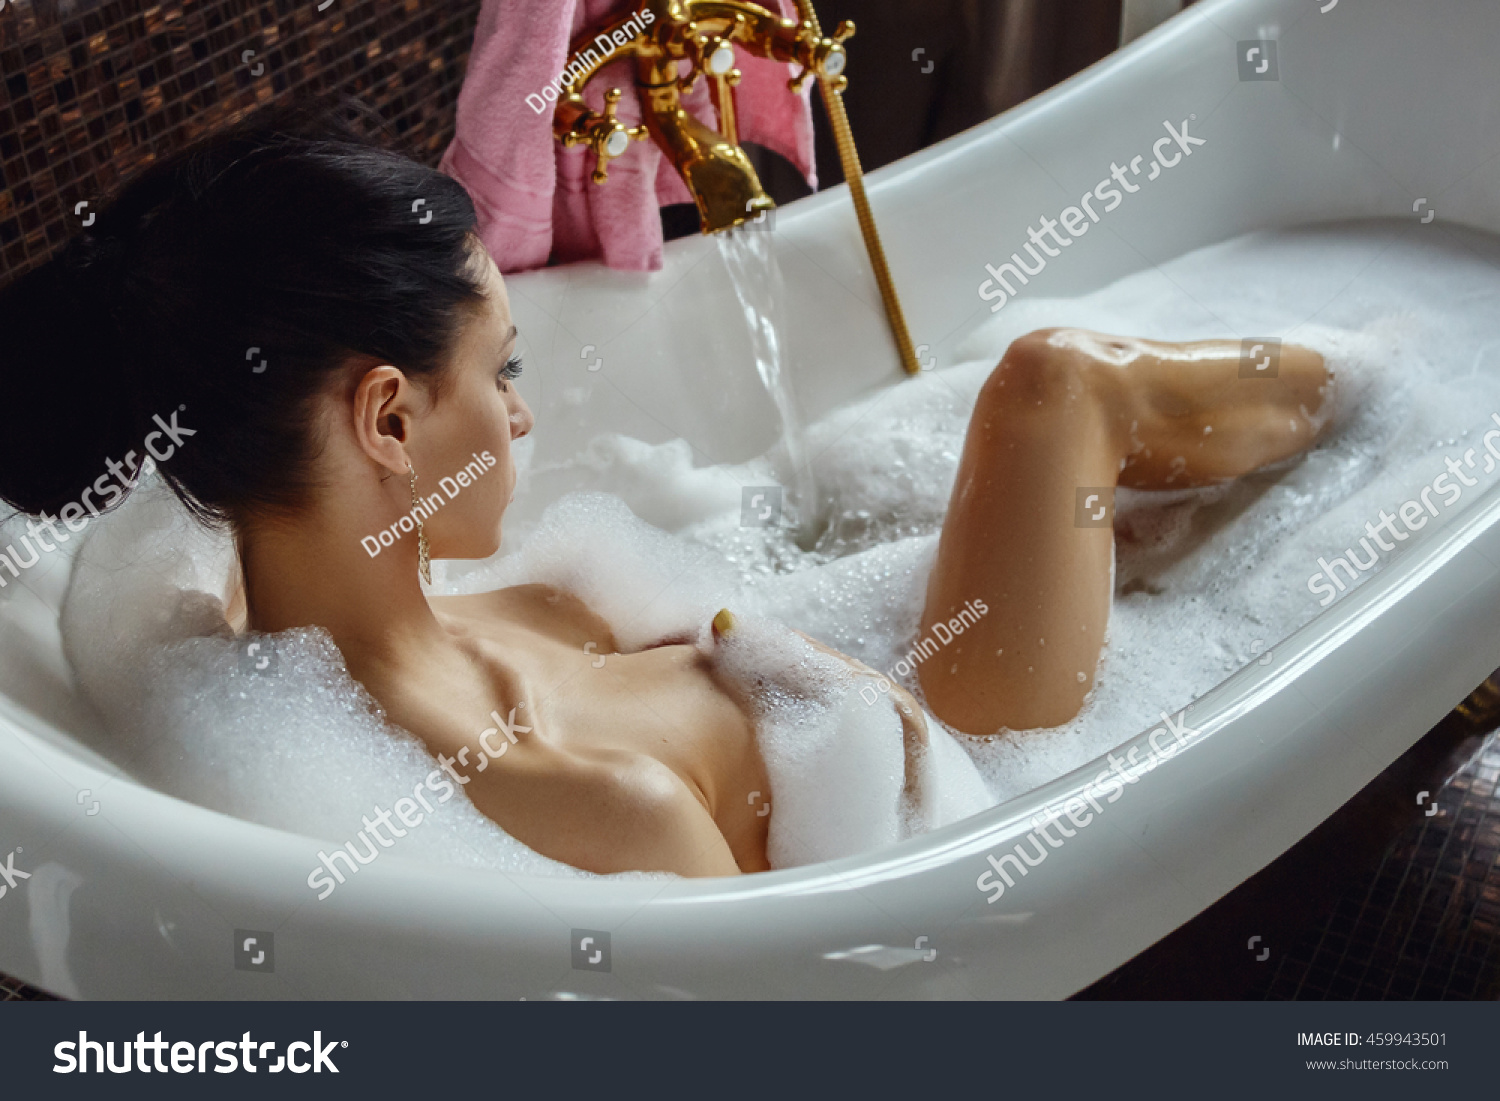 Fully clothed ladies bath in yacussy erotic bath video